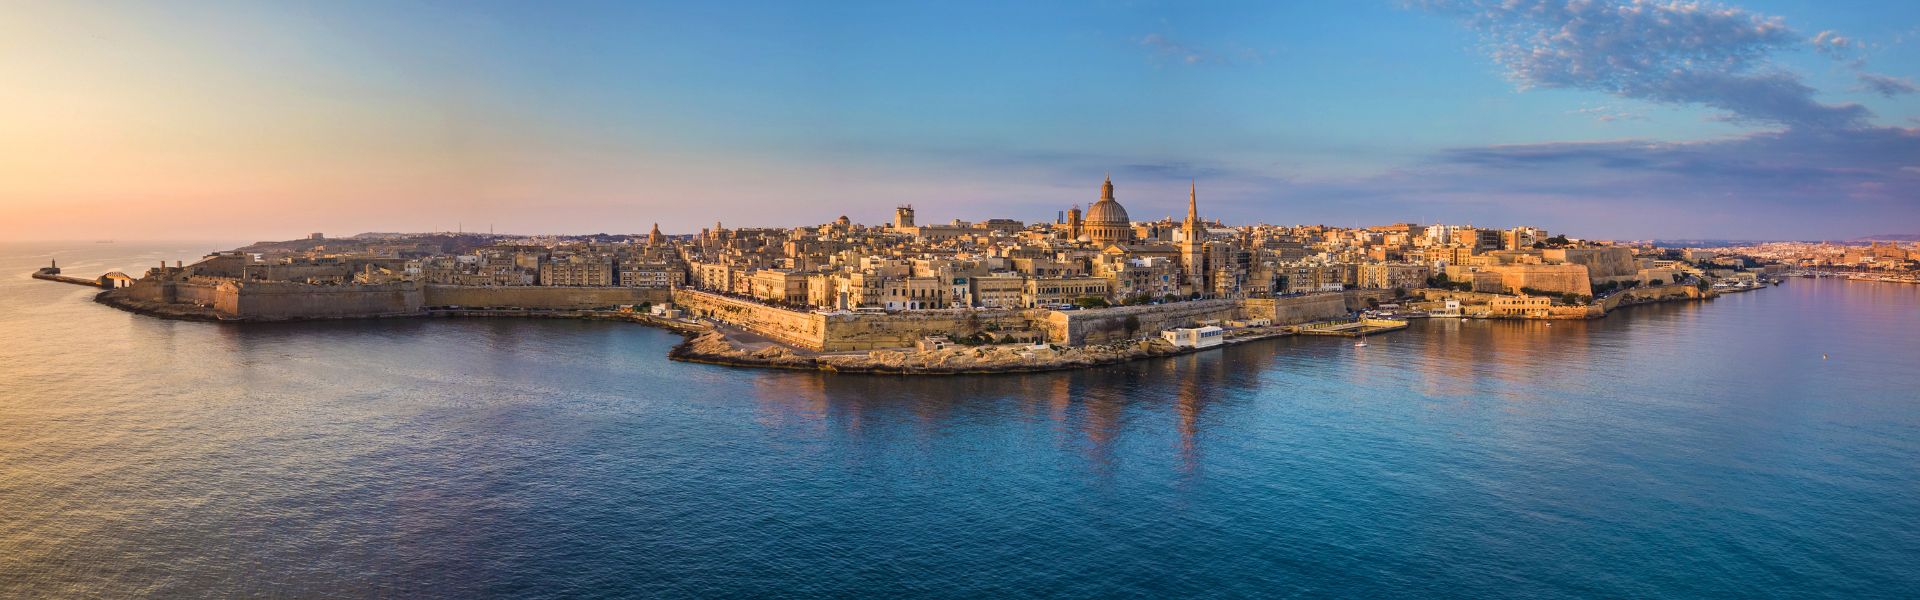 Malta Campaign page banner Valletta 02May23